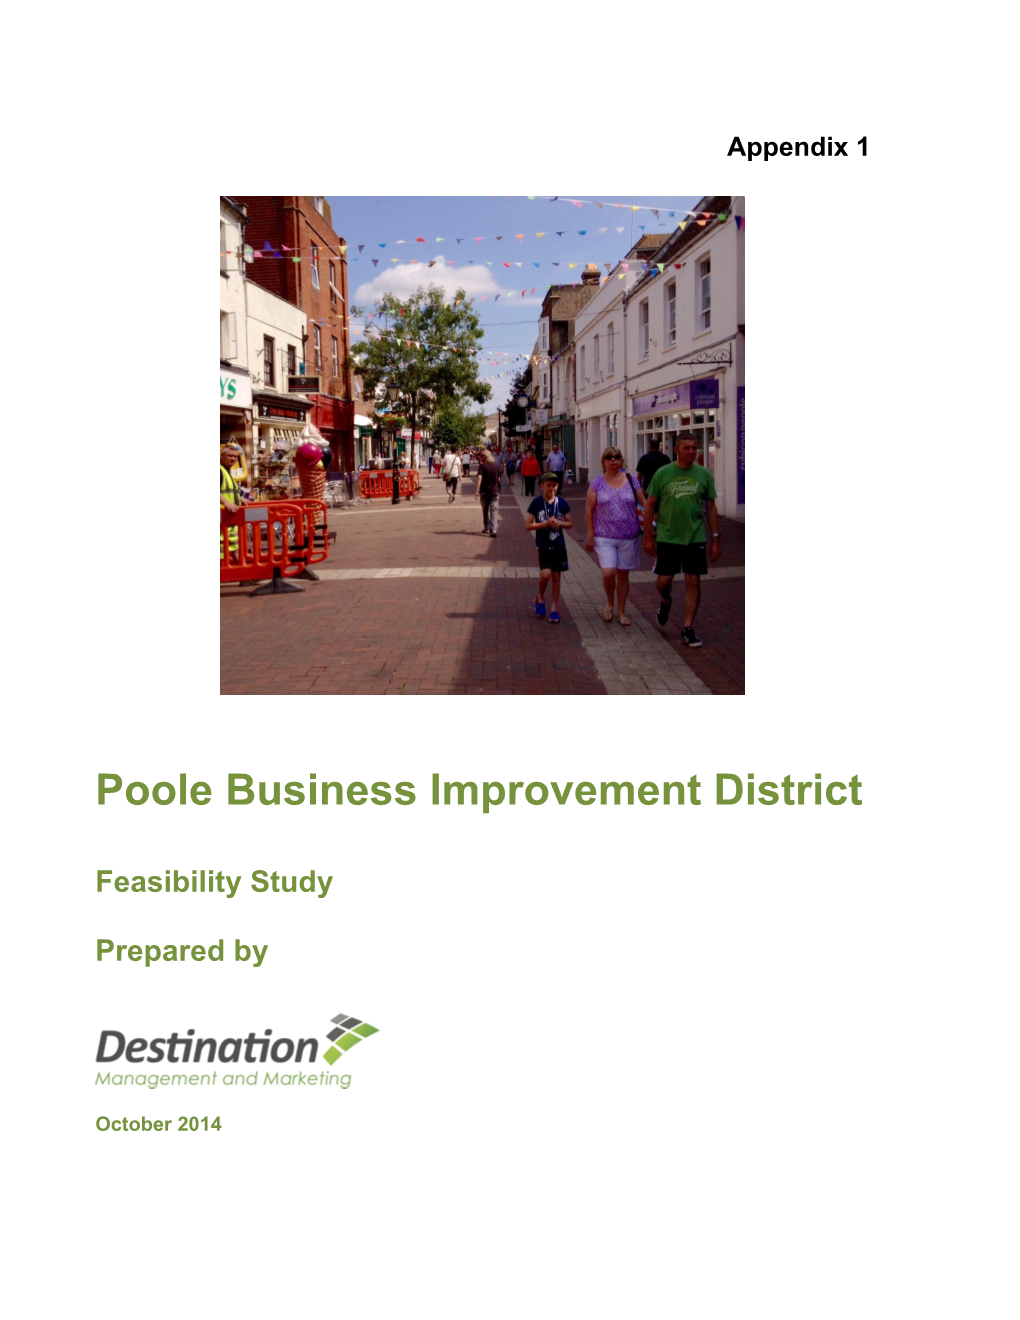 Poole Business Improvement District